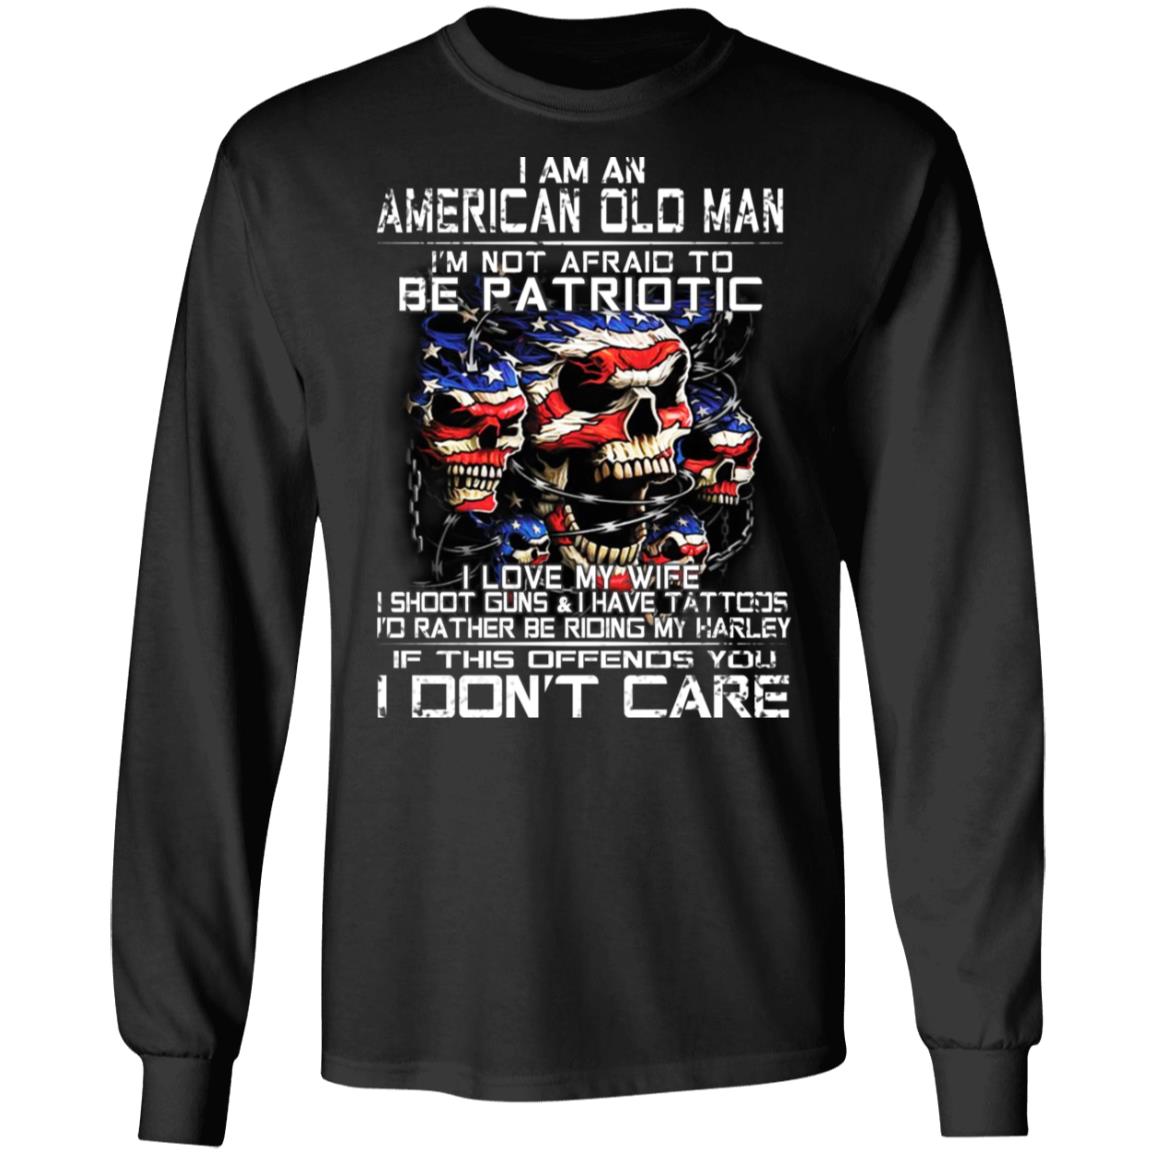 patriotic t shirts